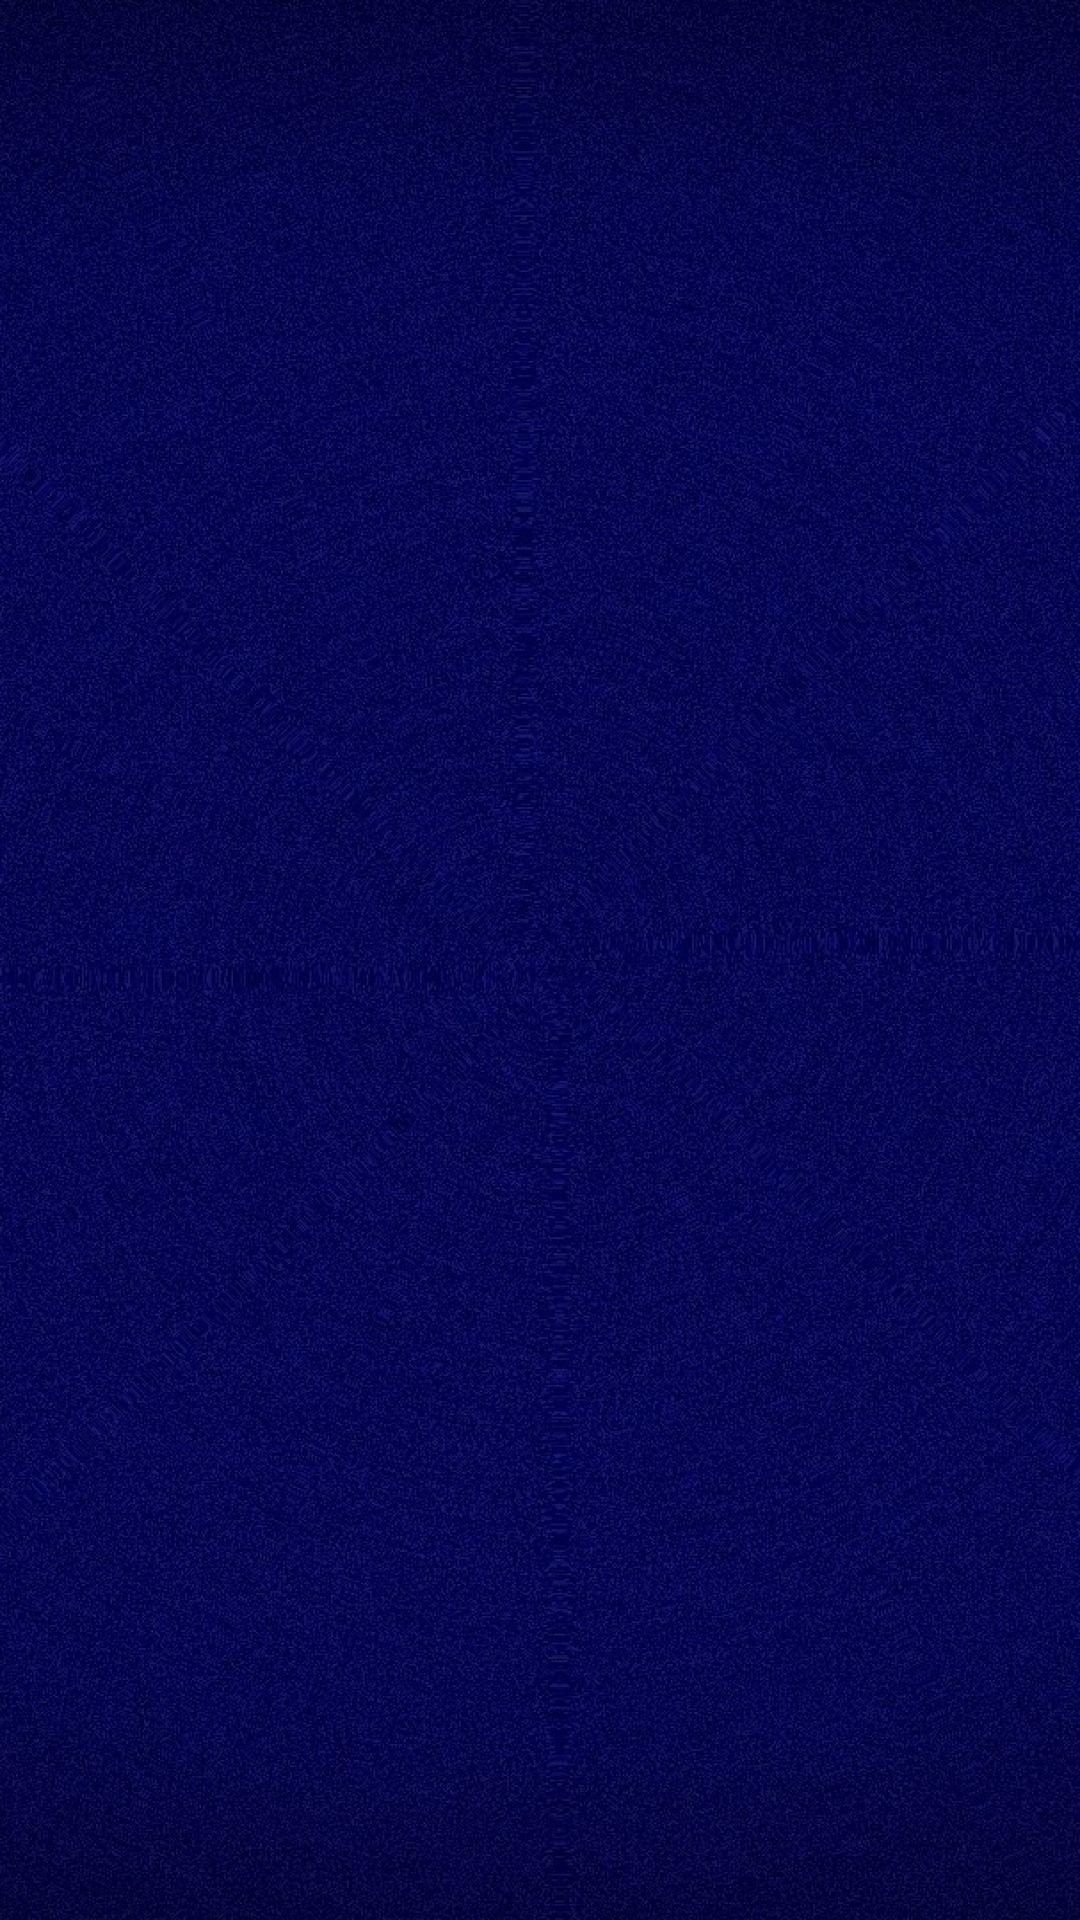 14+ Pretty Dark Blue Iphone Wallpaper - Bizt Wallpaper